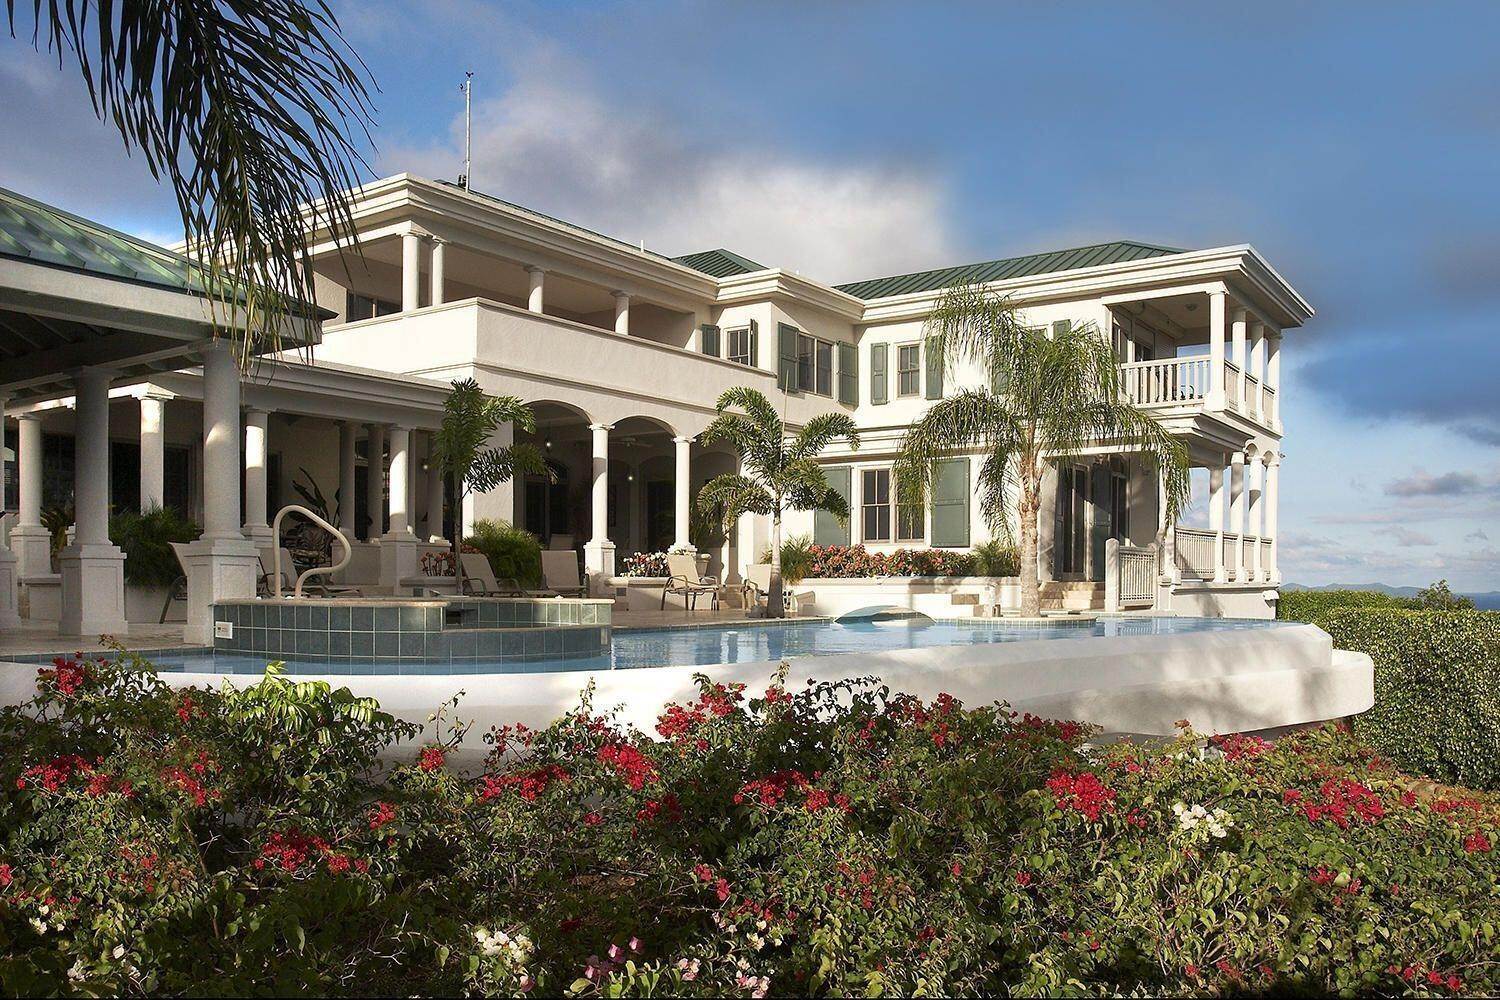 Property for Sale at 4A-1 Misgunst GNS St Thomas, Virgin Islands 00802 United States Virgin Islands